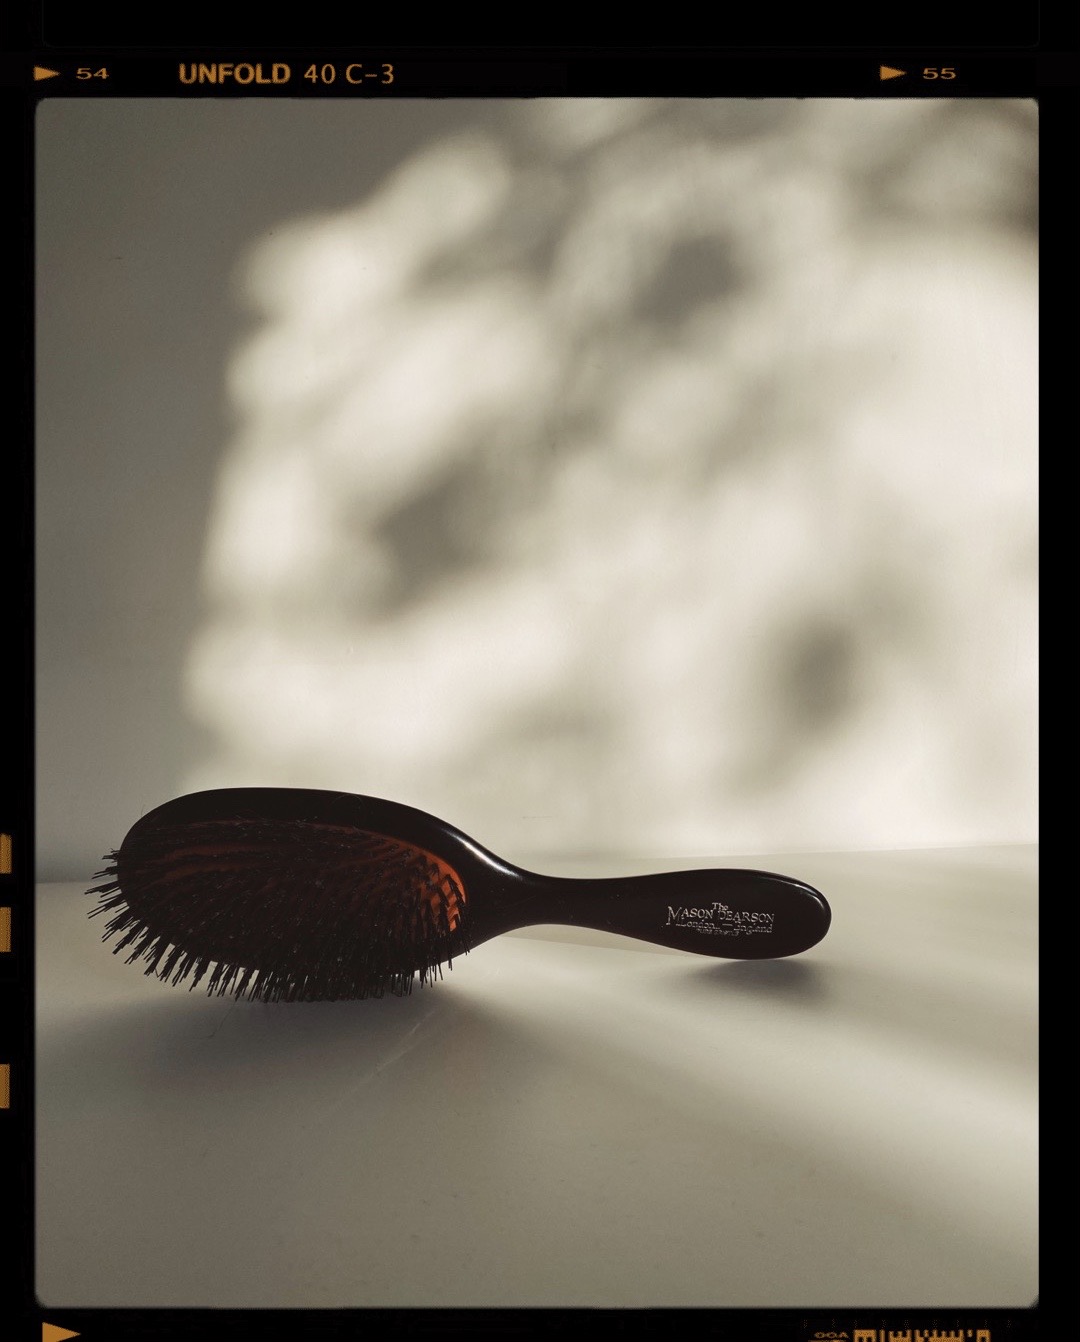 stay home self care routine during quarantine - covide-19 edition mason pearson hair brush for sensitive hair